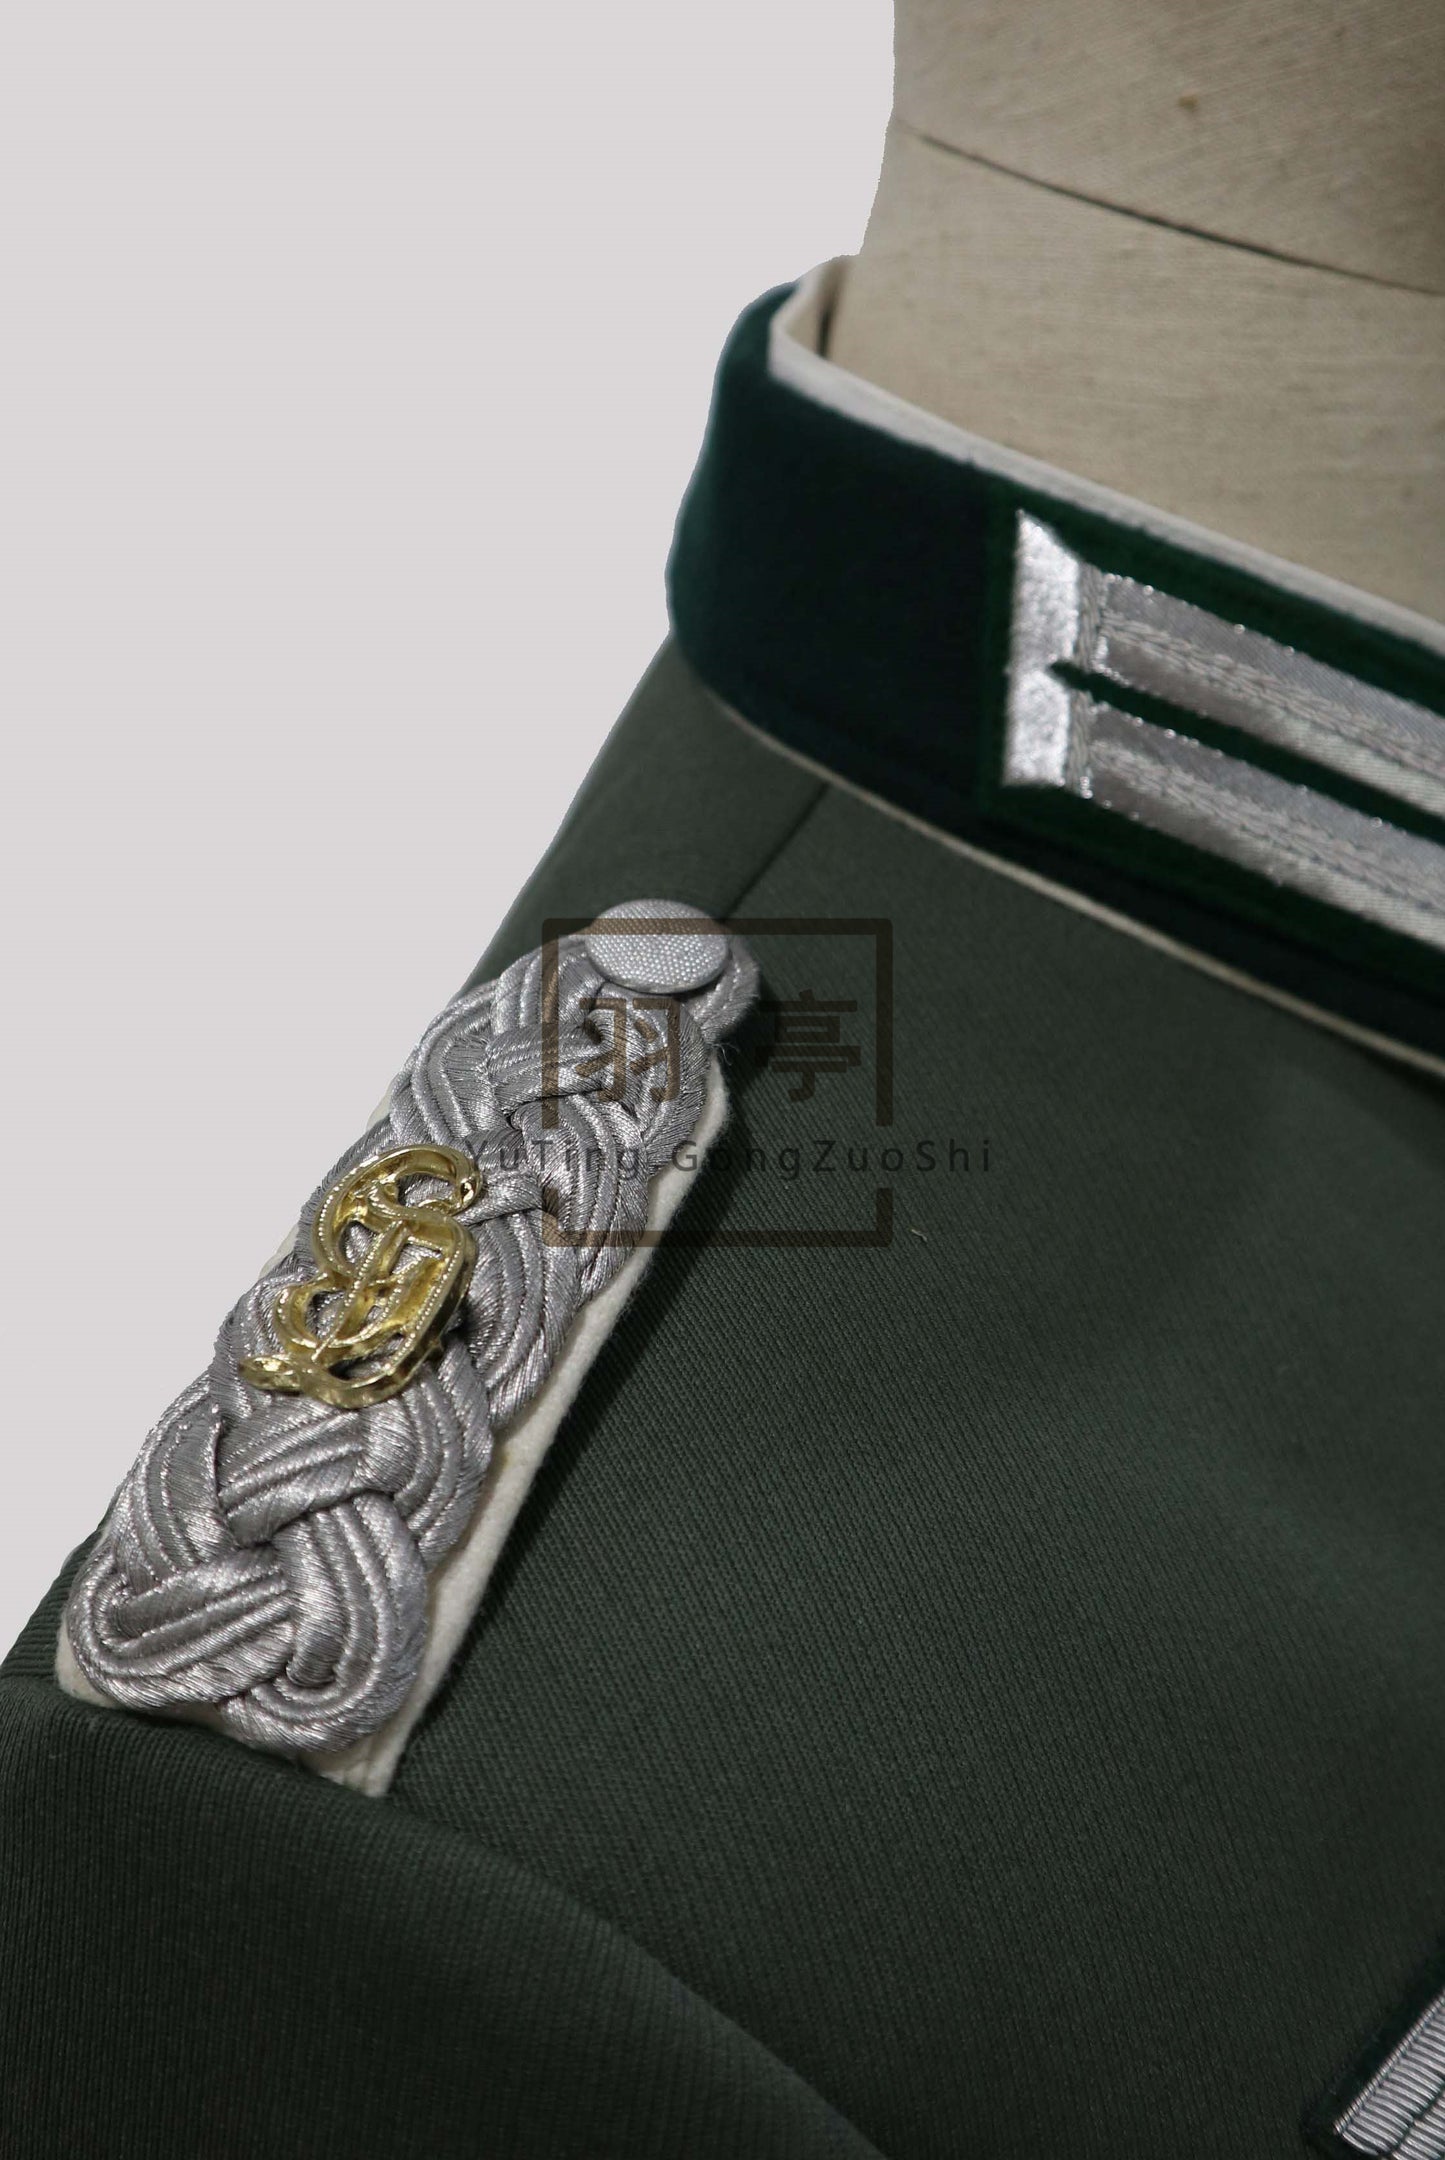 WWII German High-Quality “GD” Parade Dress